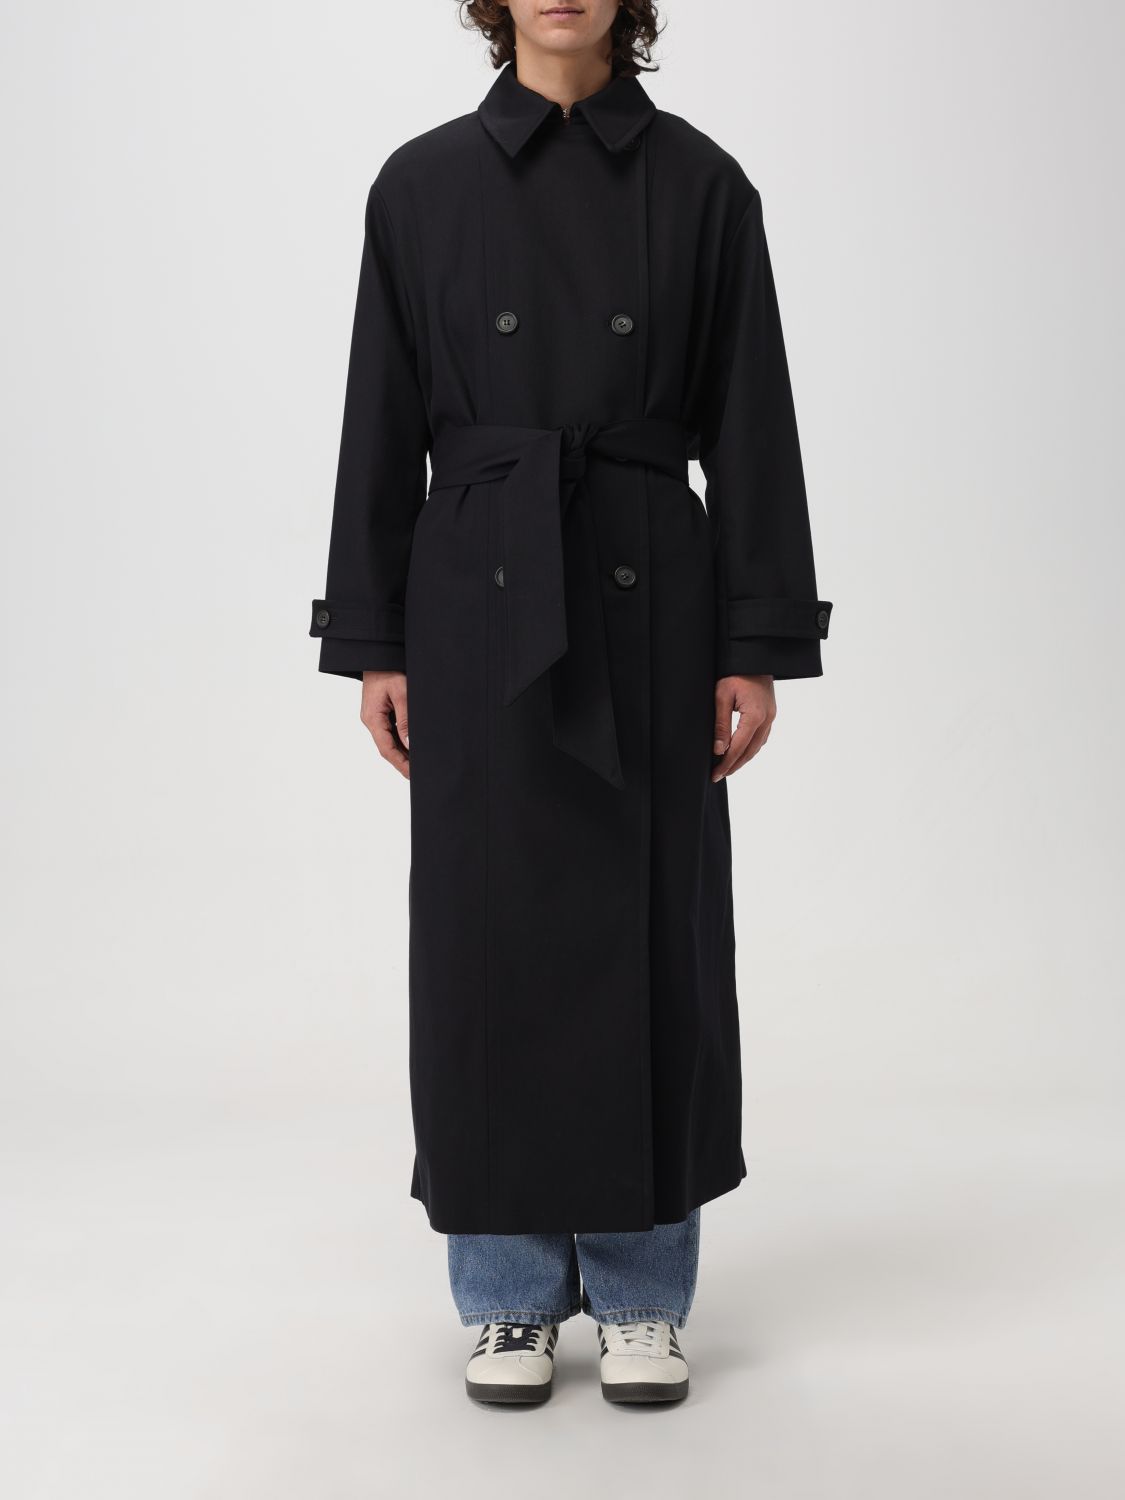 Shop Apc Trench Coat A.p.c. Woman Color Black